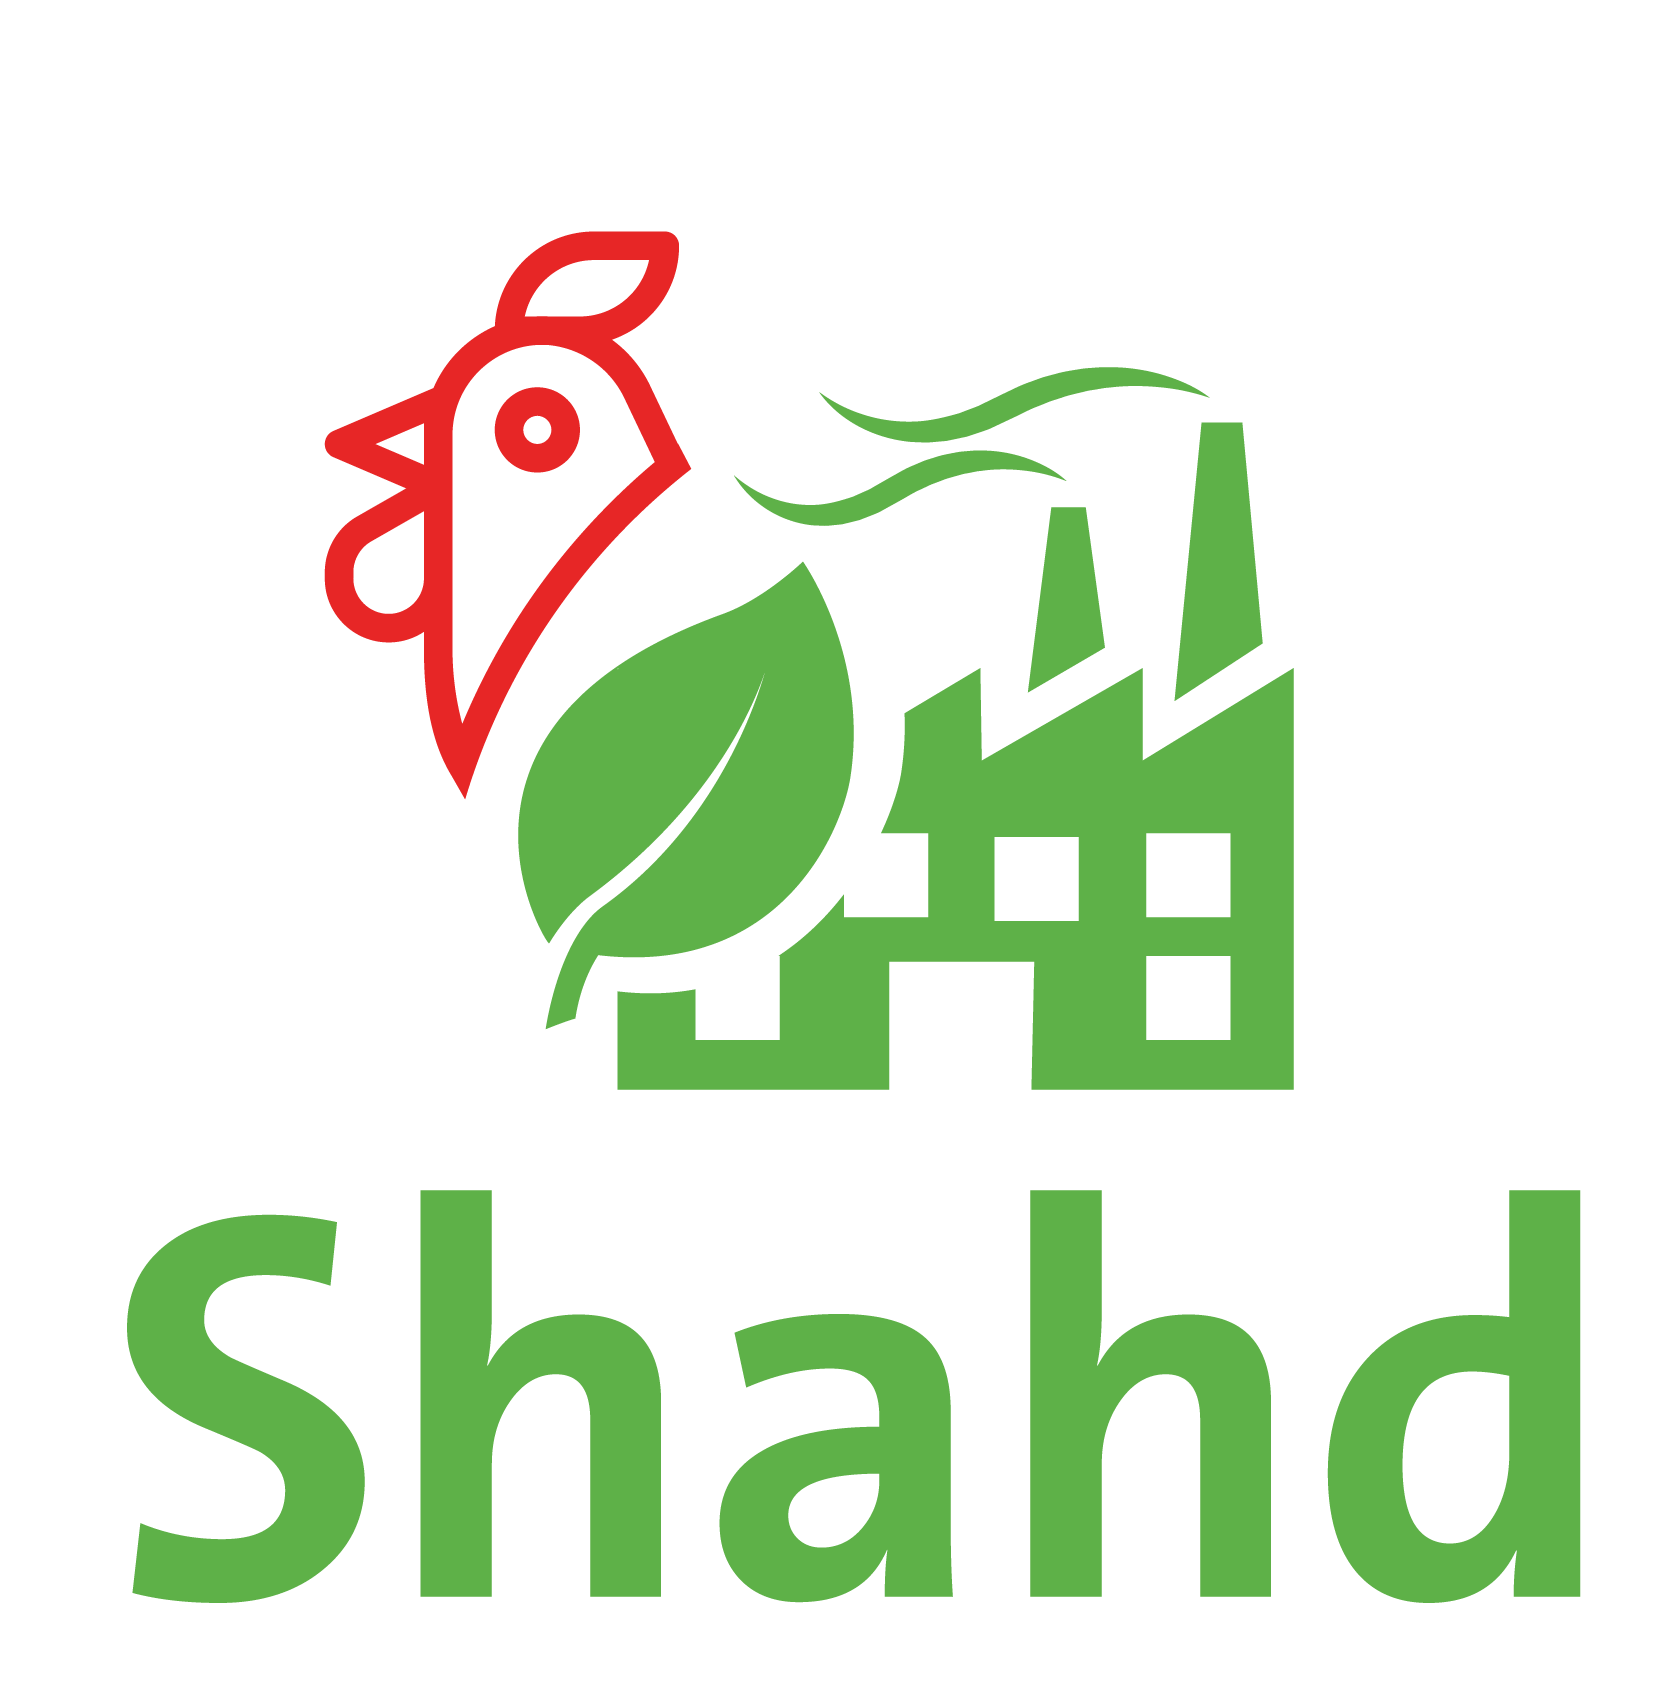 Shahd